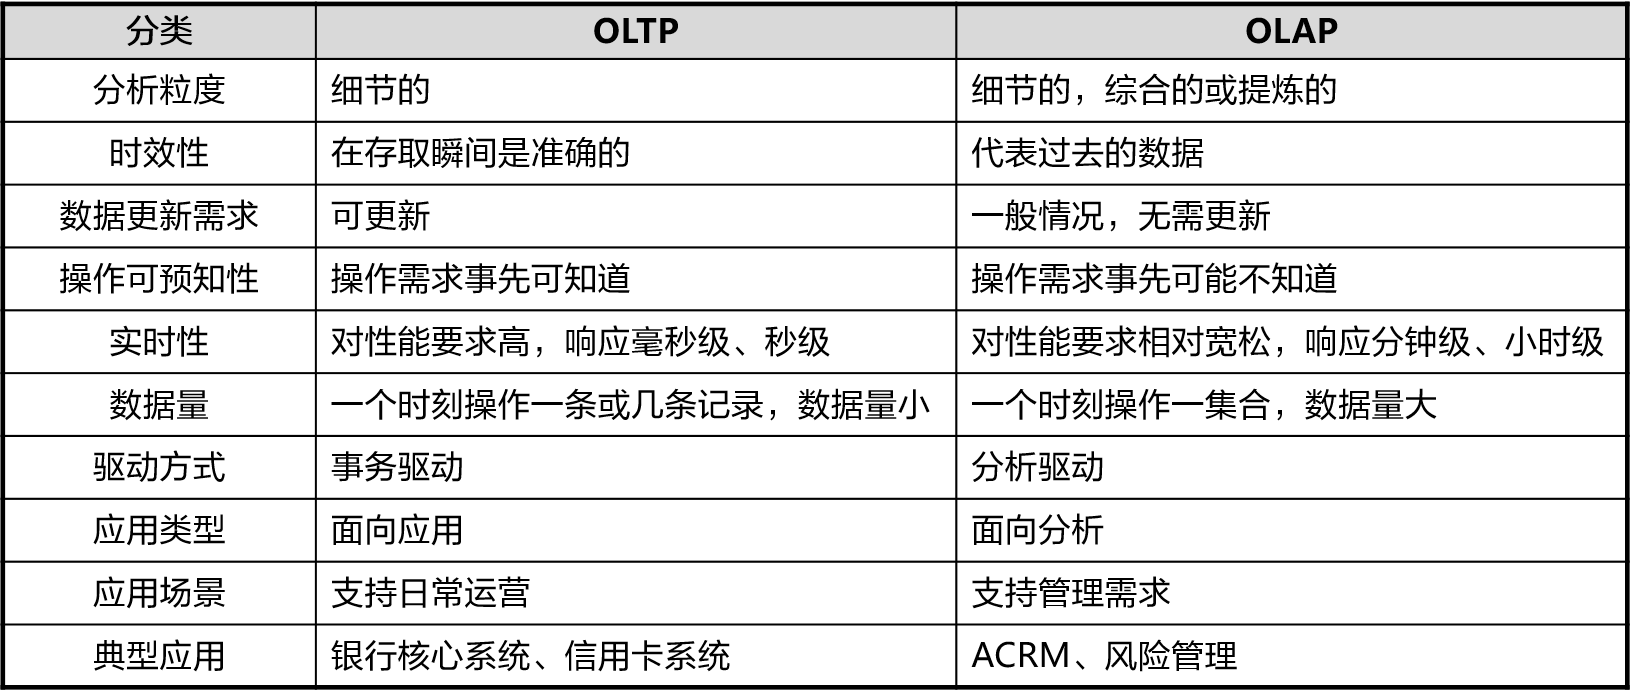 OLTP与OLAP对比分析表格